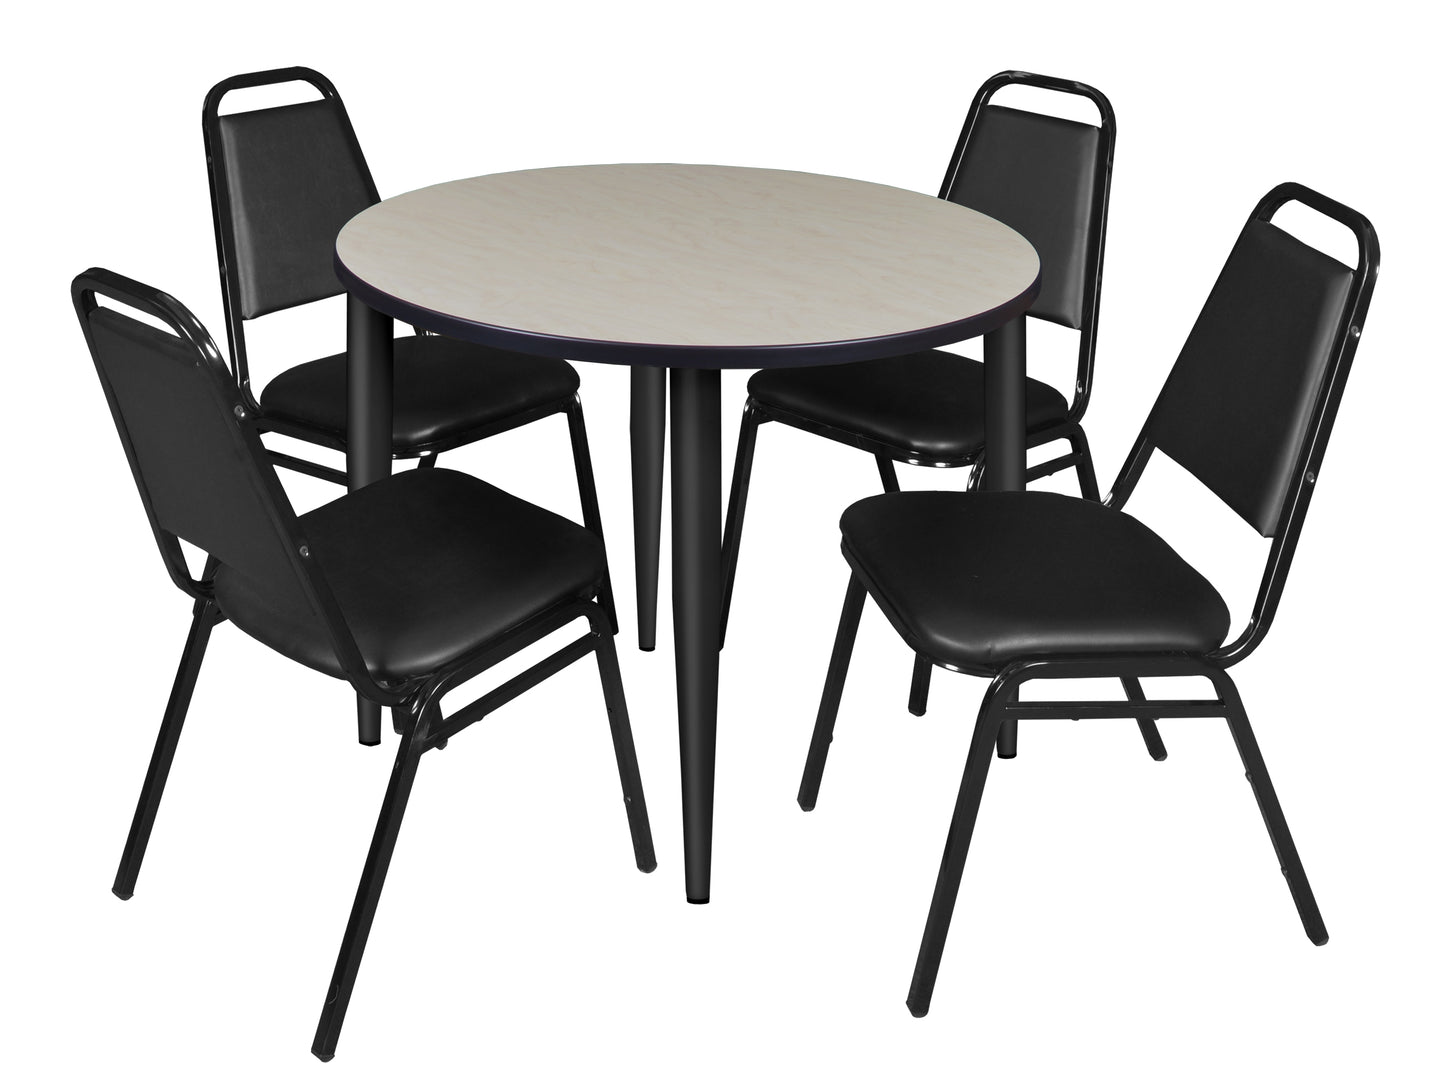 Regency Kahlo 36 in. Round Breakroom Table & 4 Restaurant Stack Chairs - Black